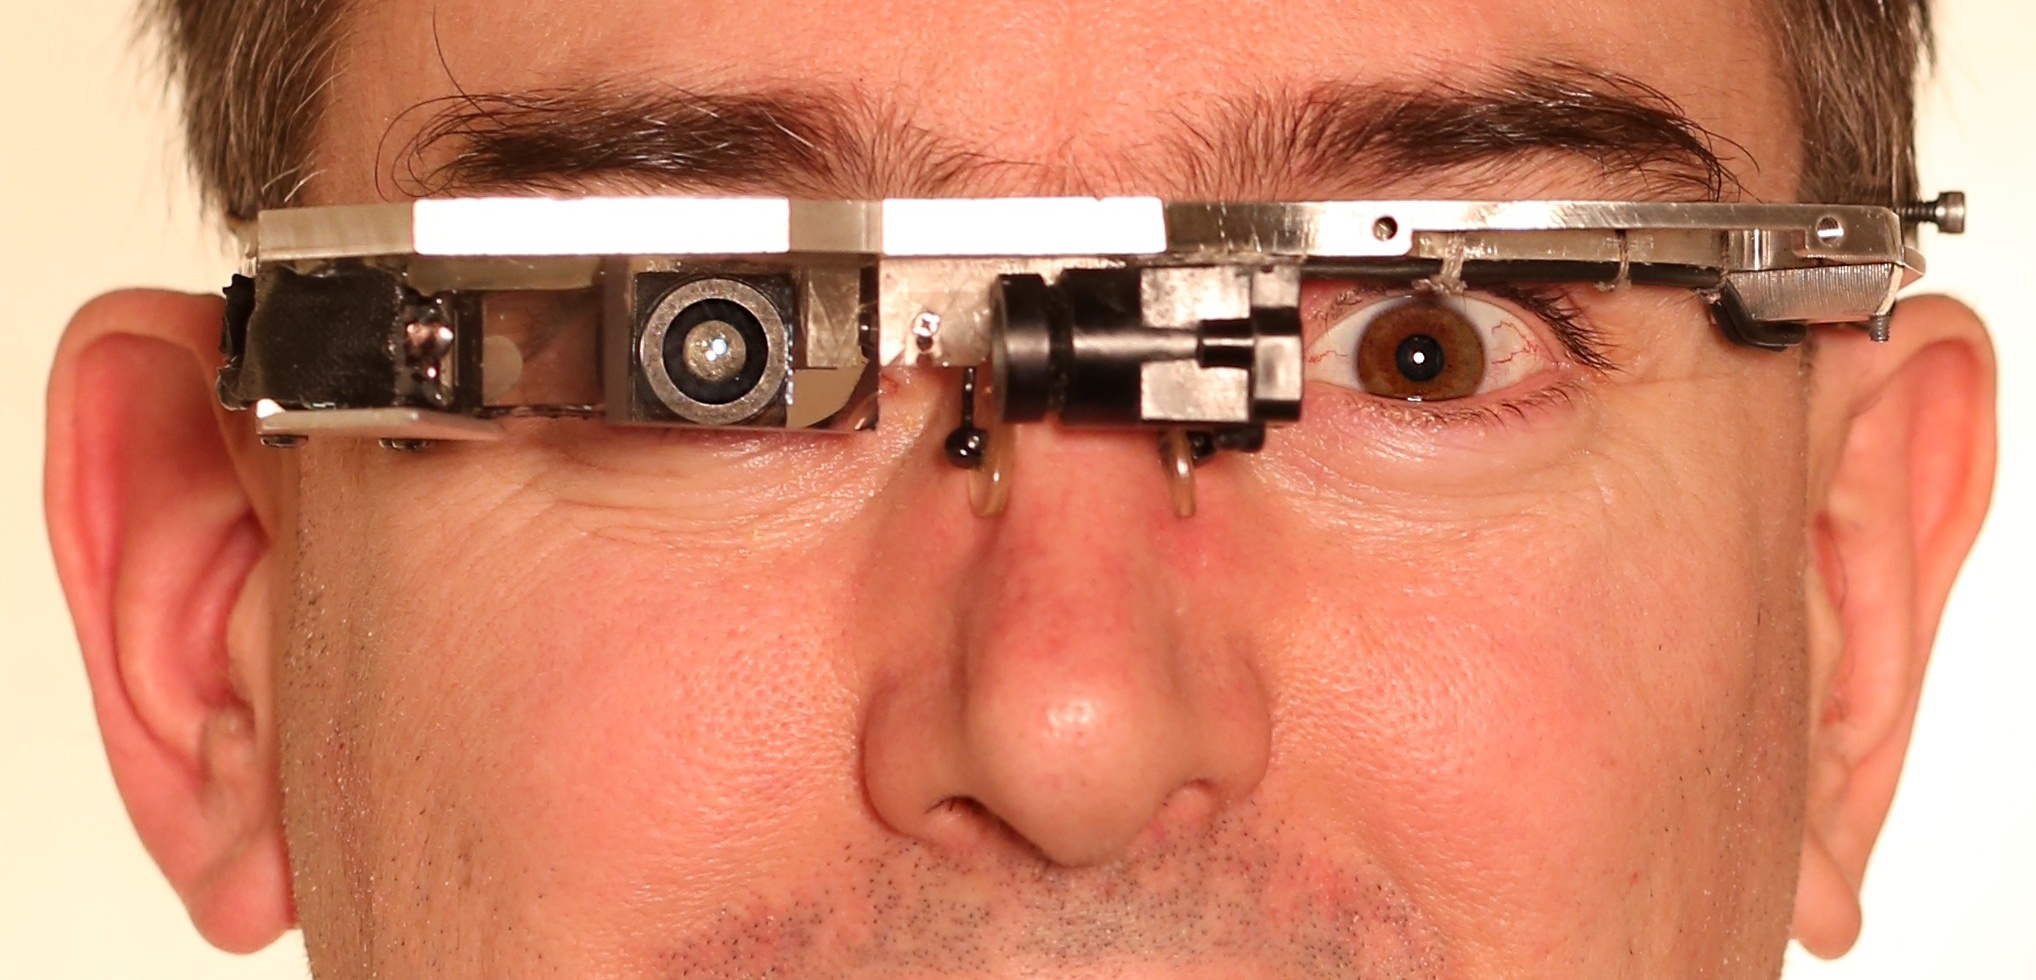 Steve Mann with a bare EyeTap device